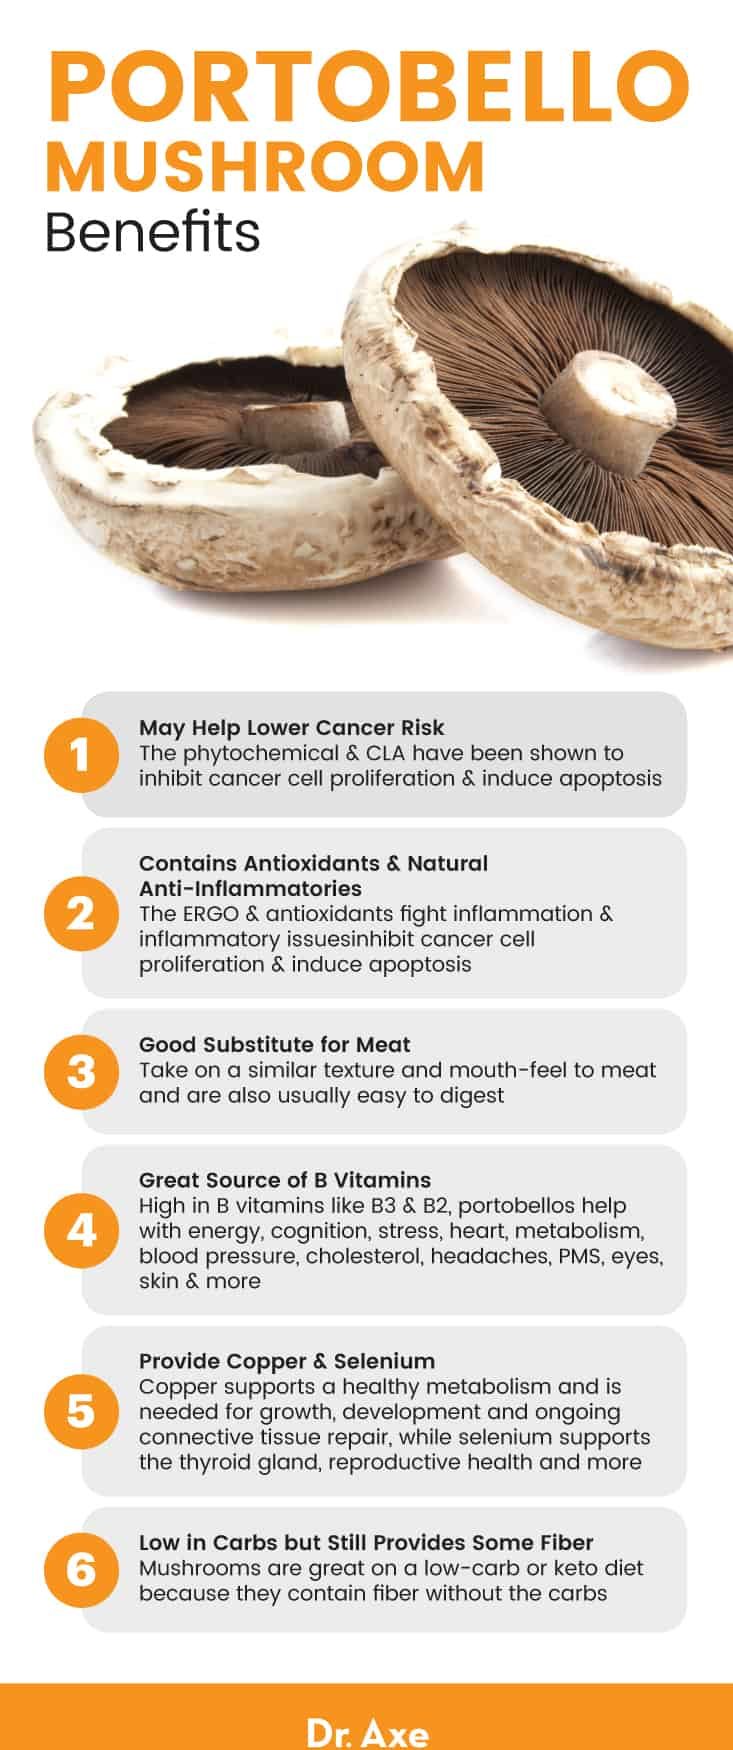 Portobello mushroom benefits - Dr. Axe